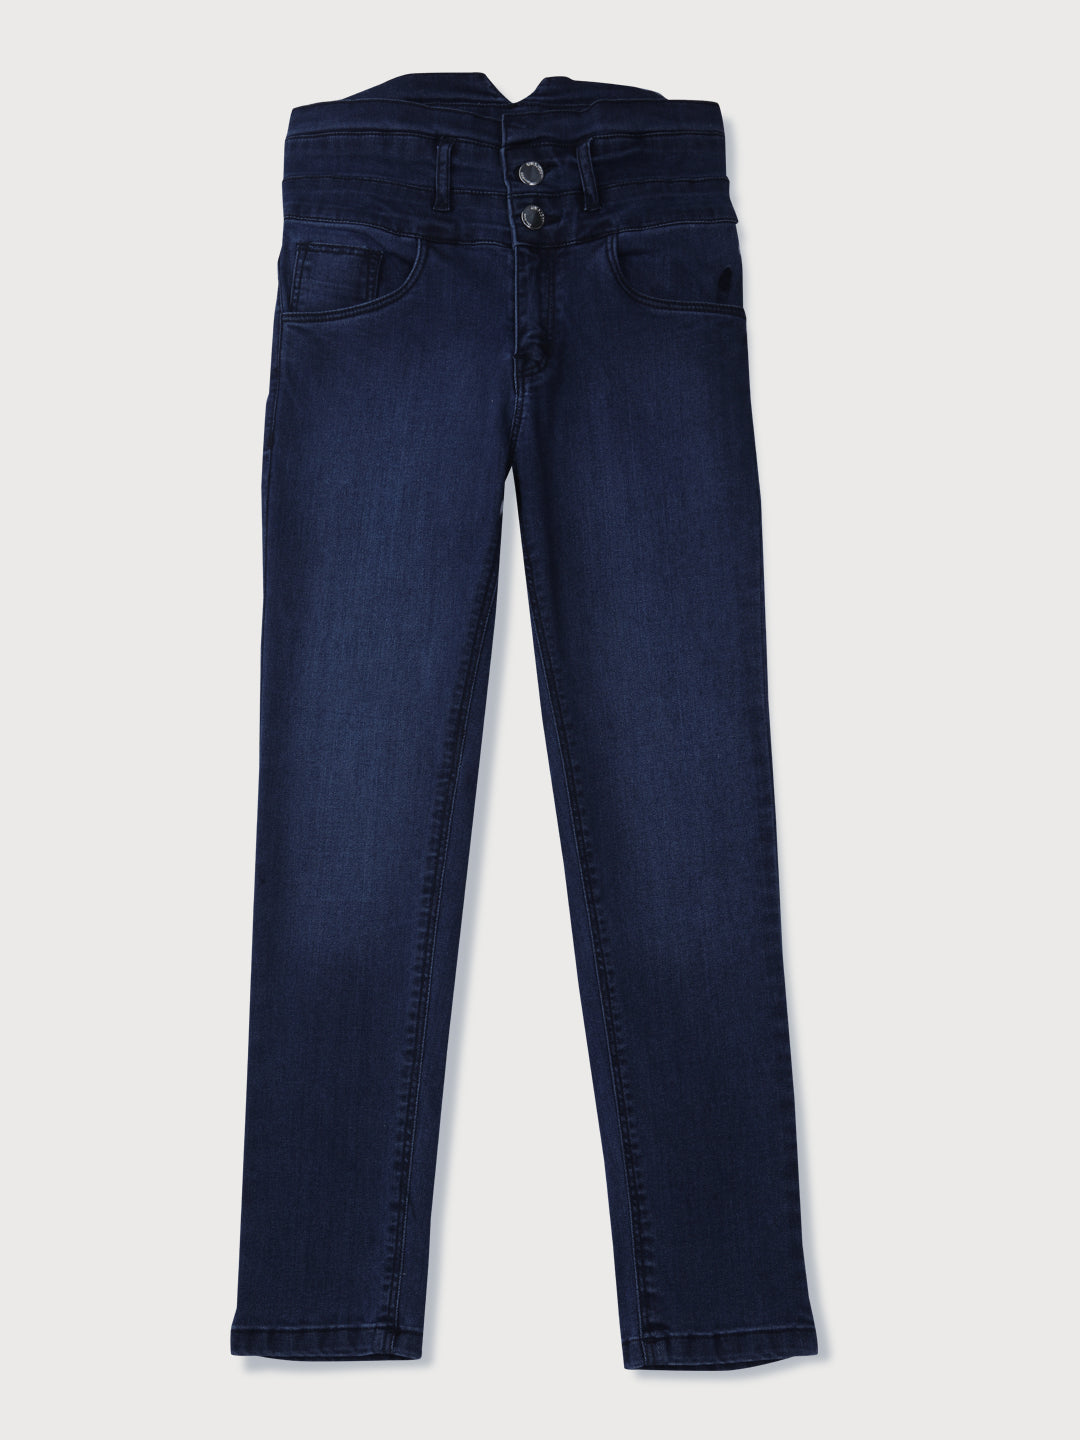 Girls Navy Blue Solid Denim Jeans